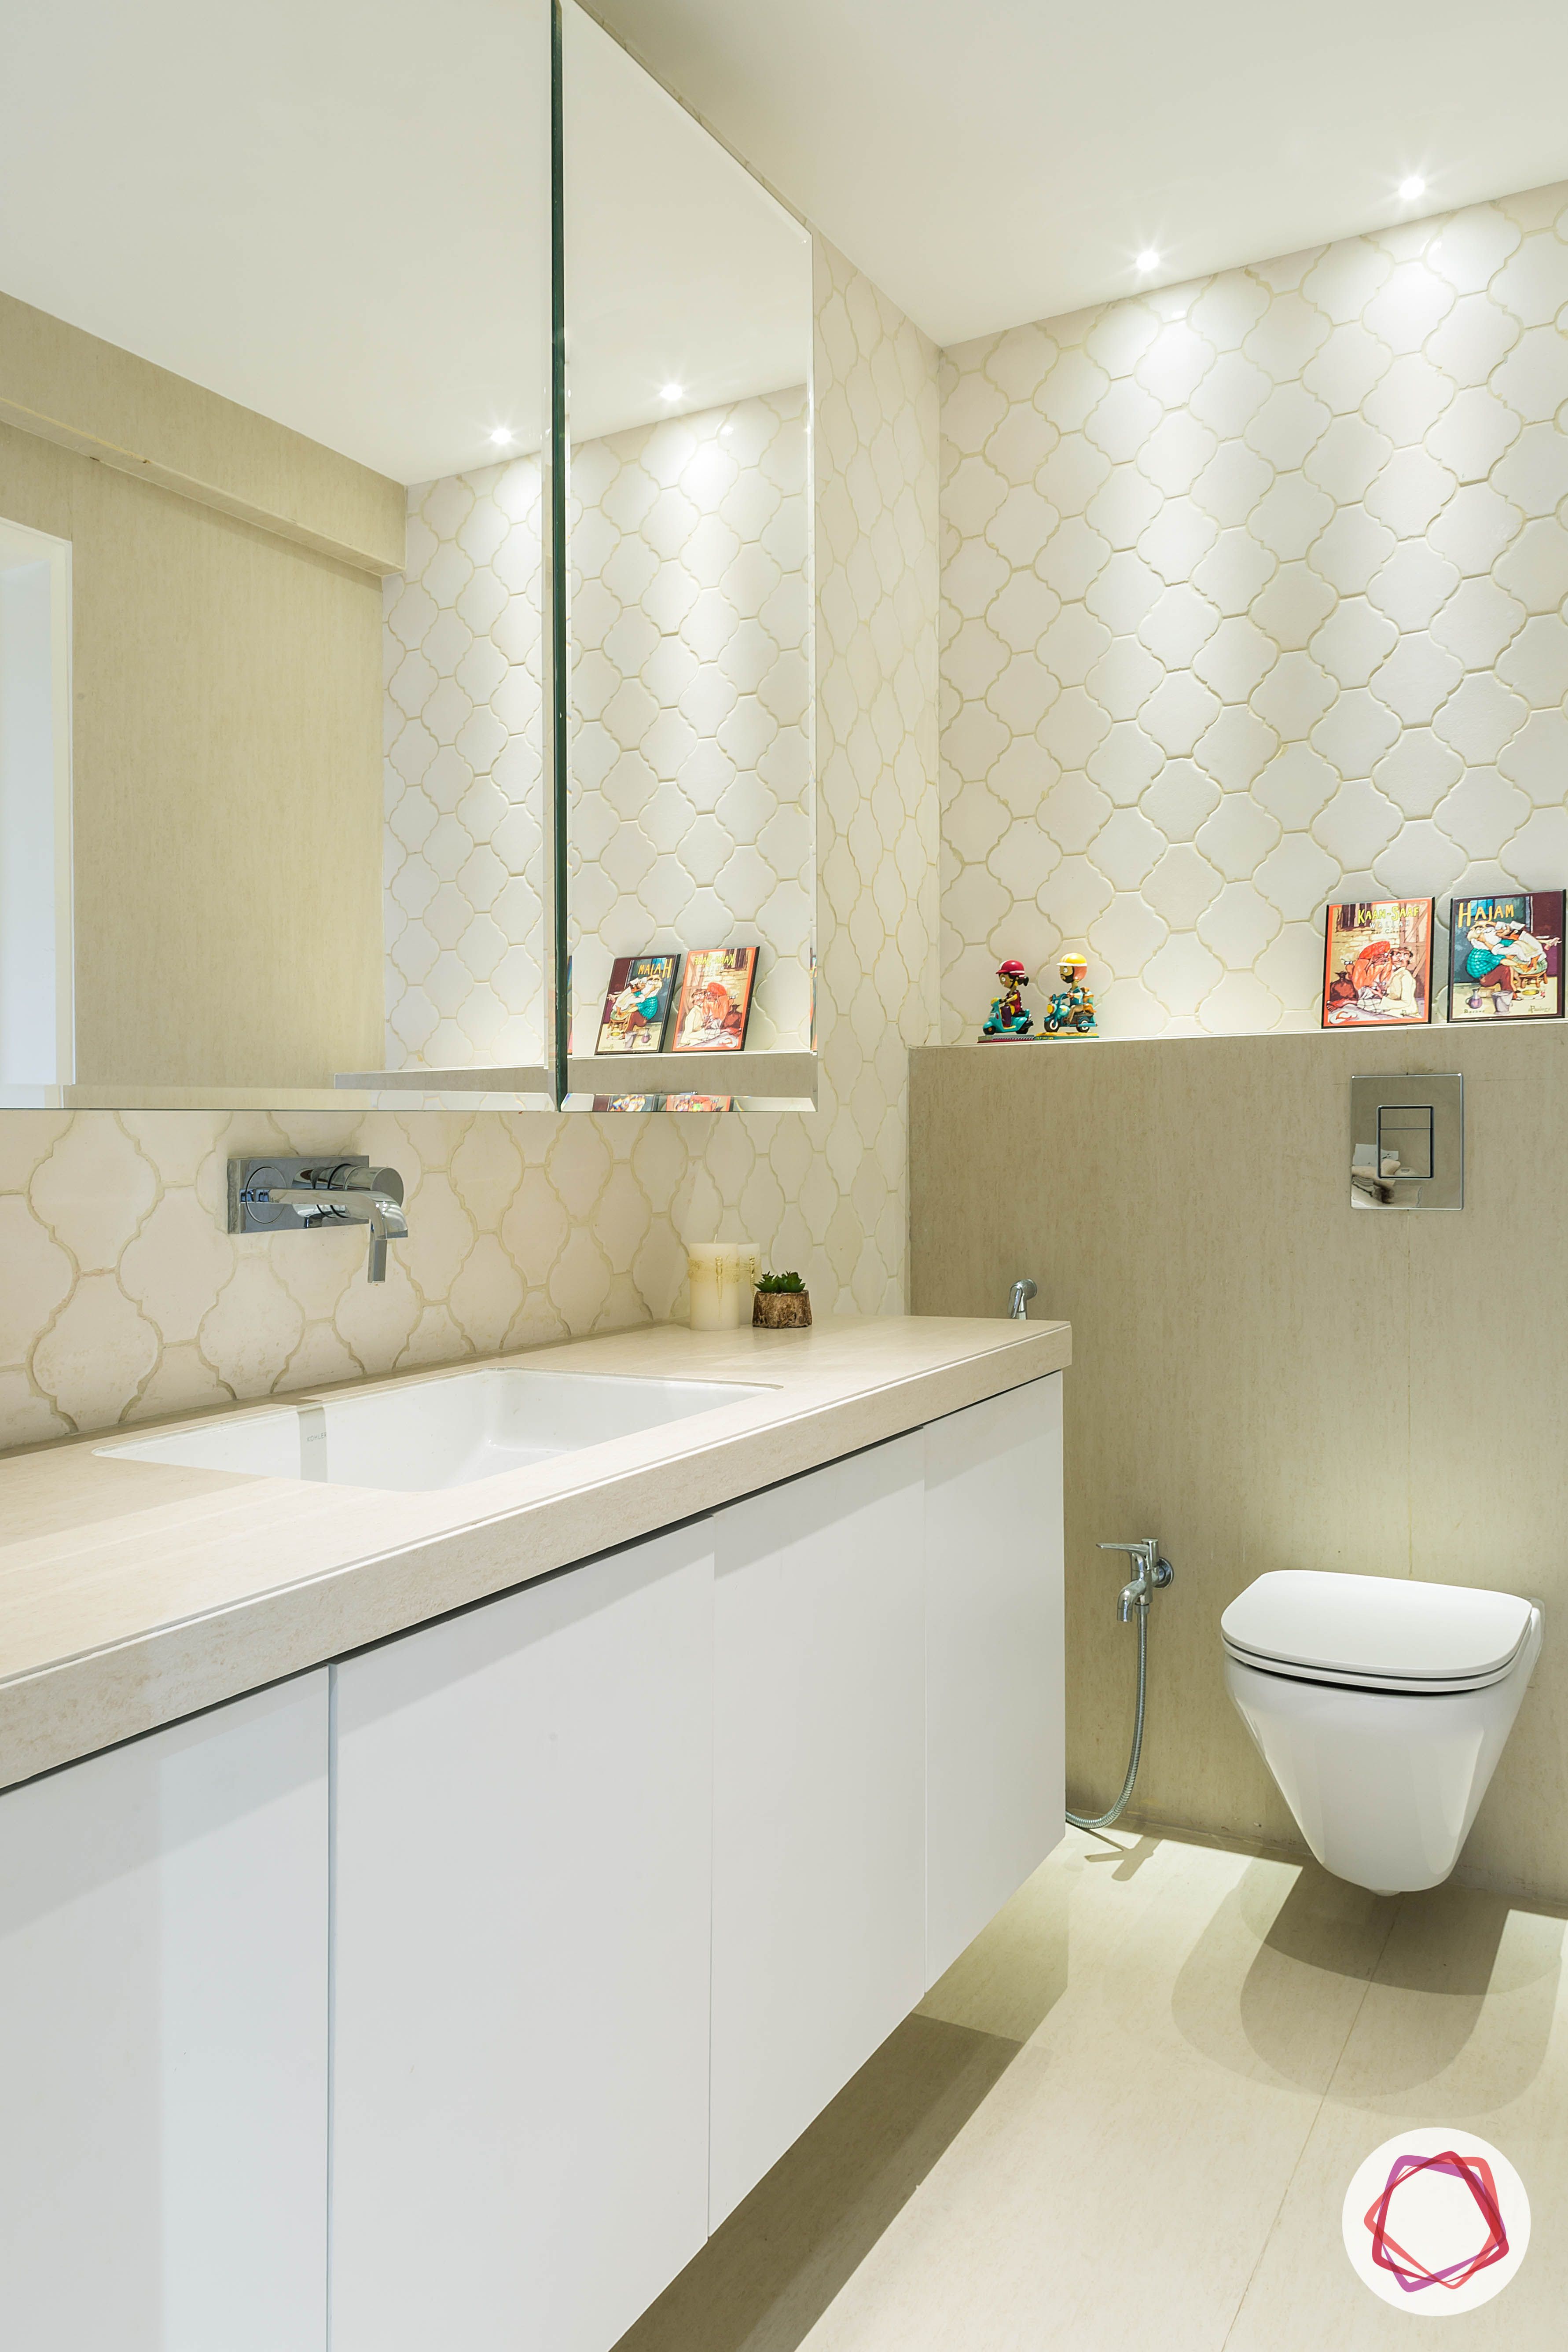 4bhk house plan-bathroom designs-bathroom tiles-moroccan tiles-vanity unit-mirror